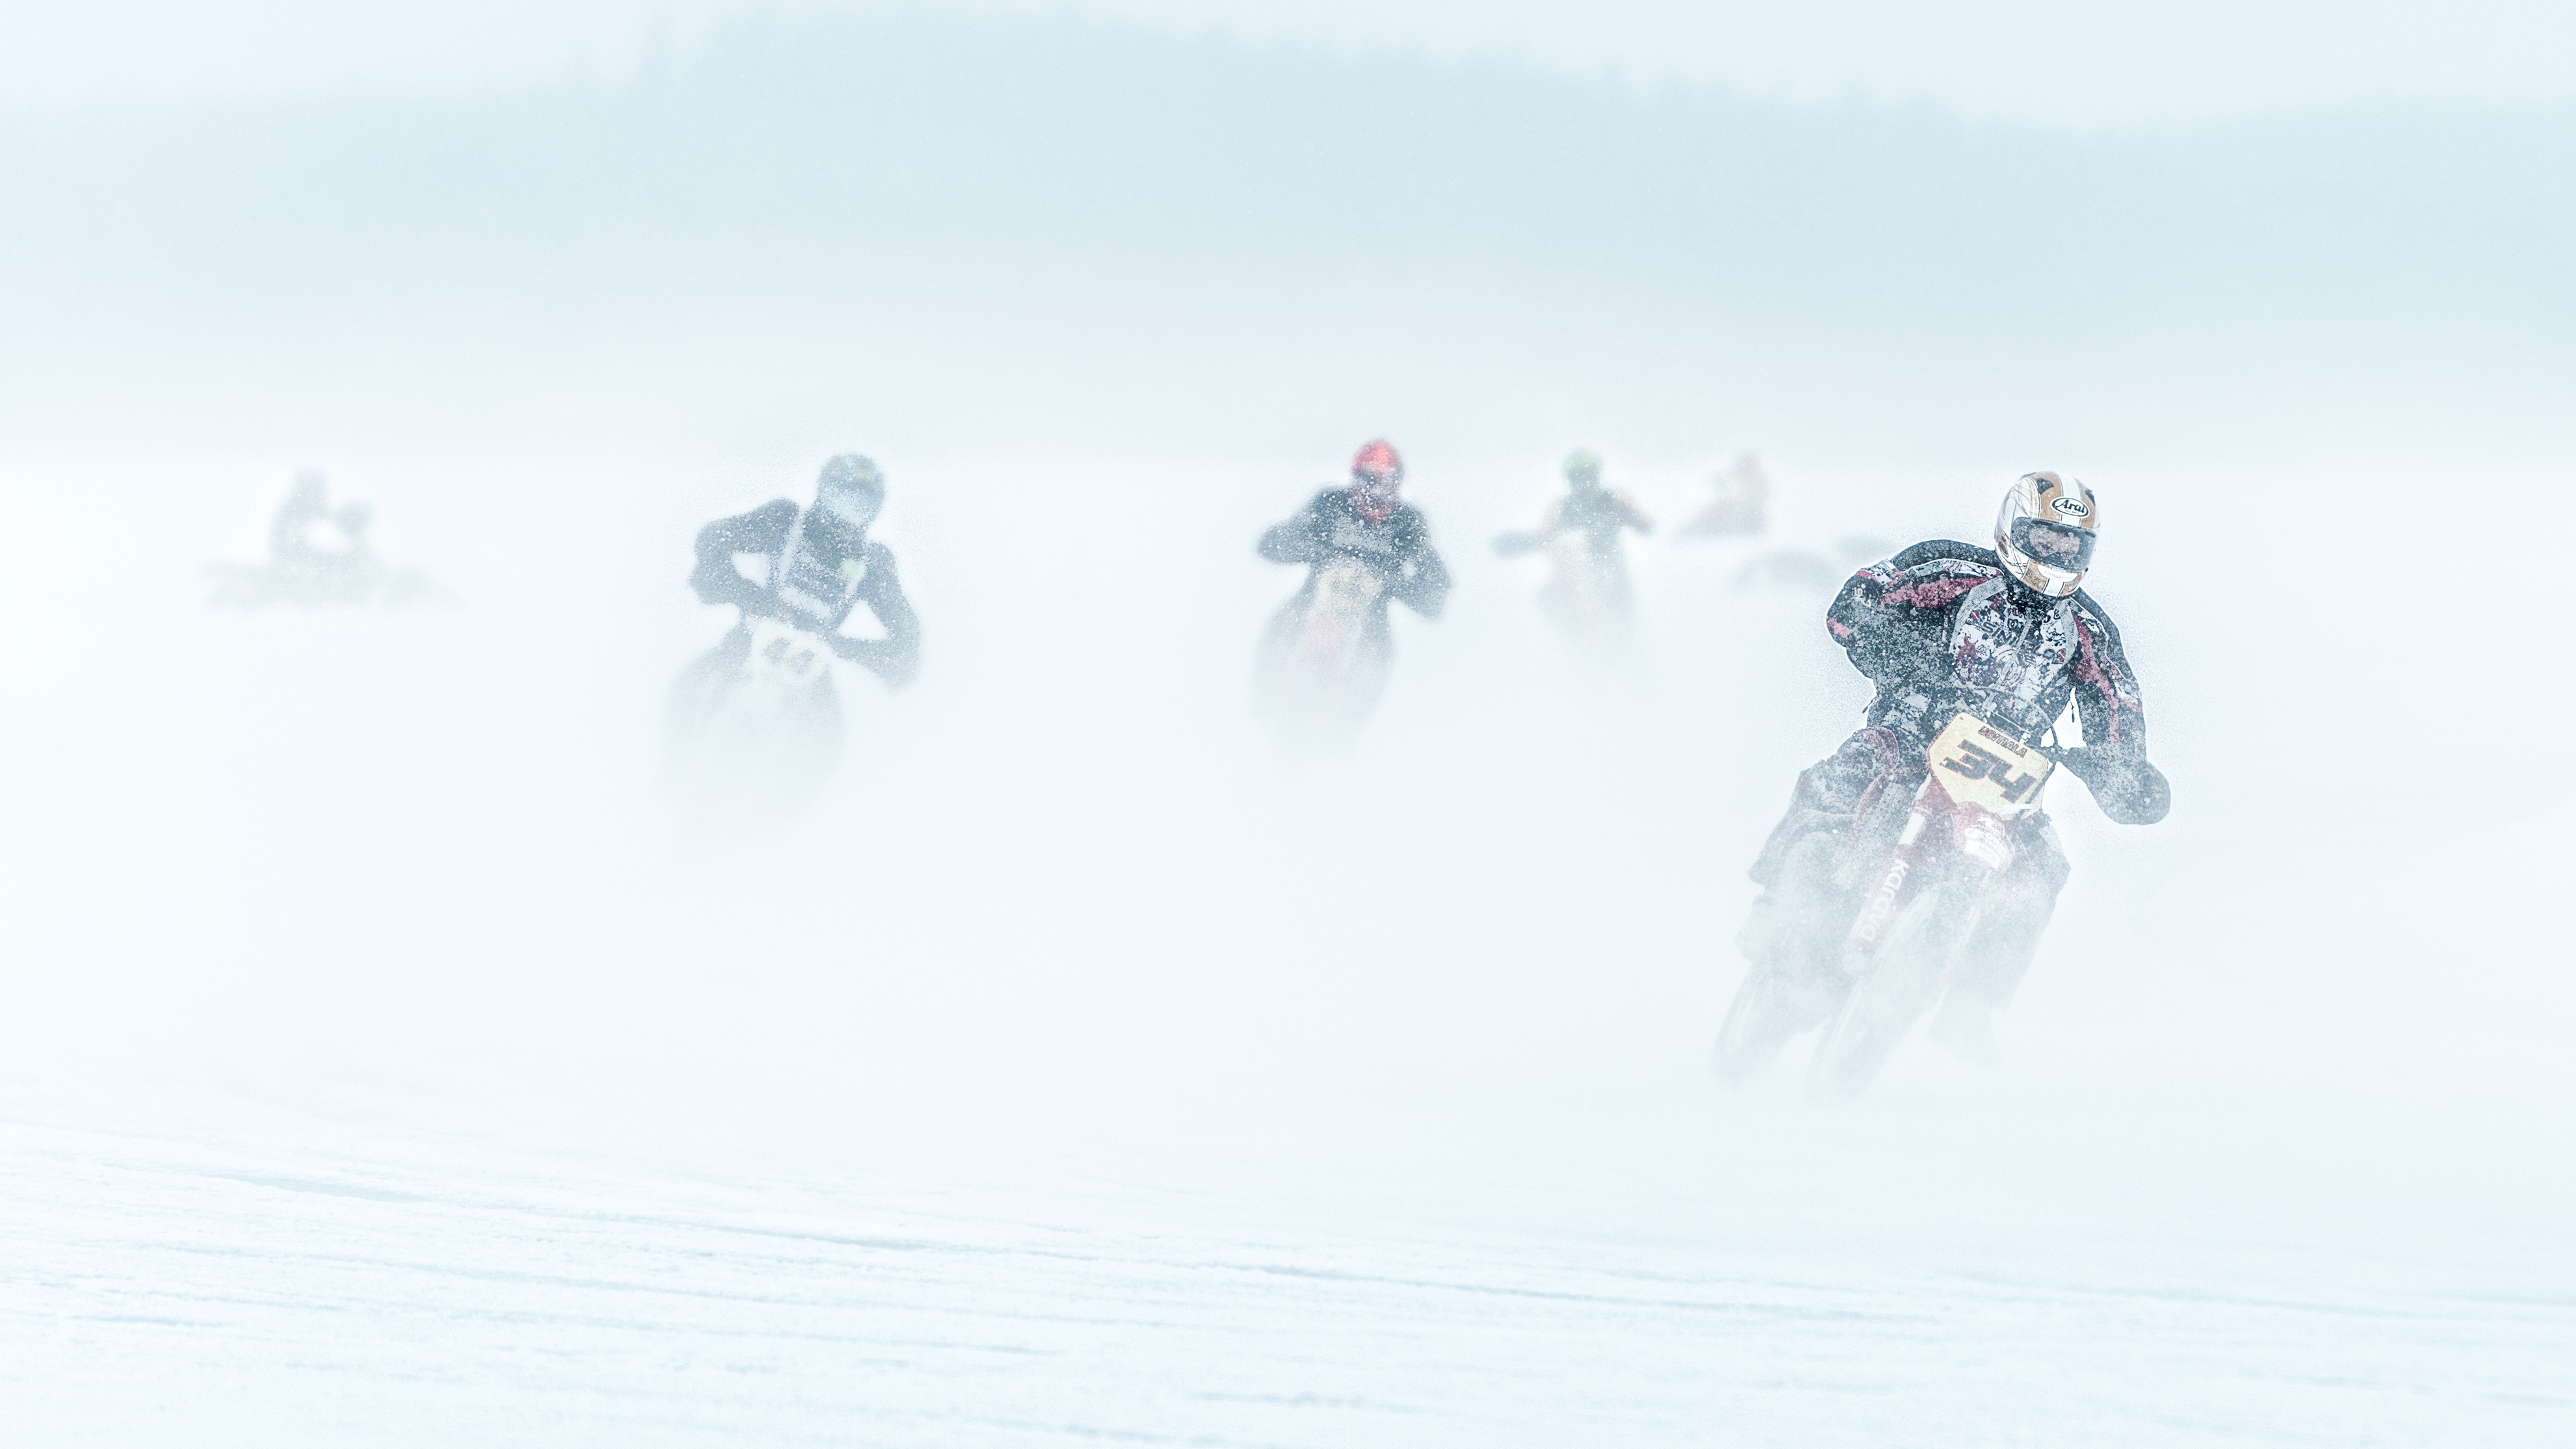 Motocross Motorcycle Race Winter Snow 3963x2229